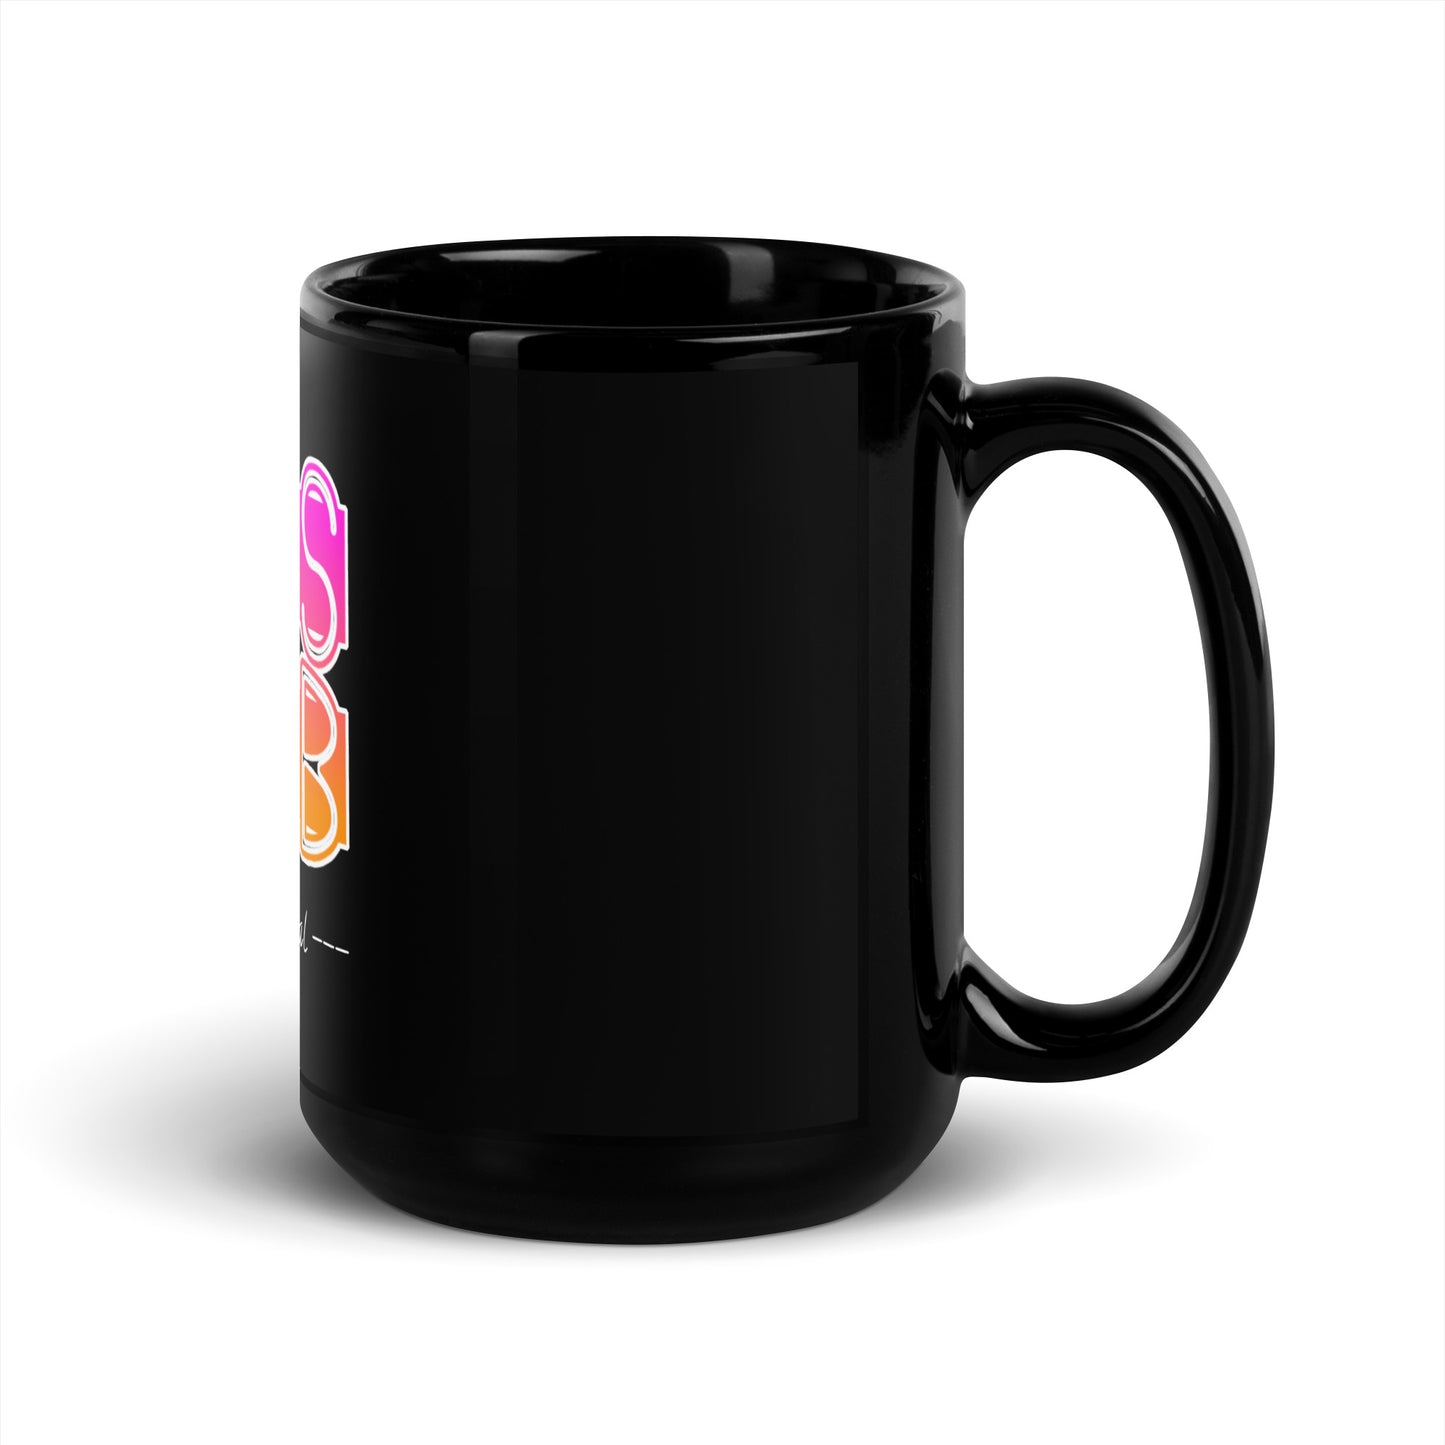 Moms Club -Sanity Optional Mug  (pink-orange)